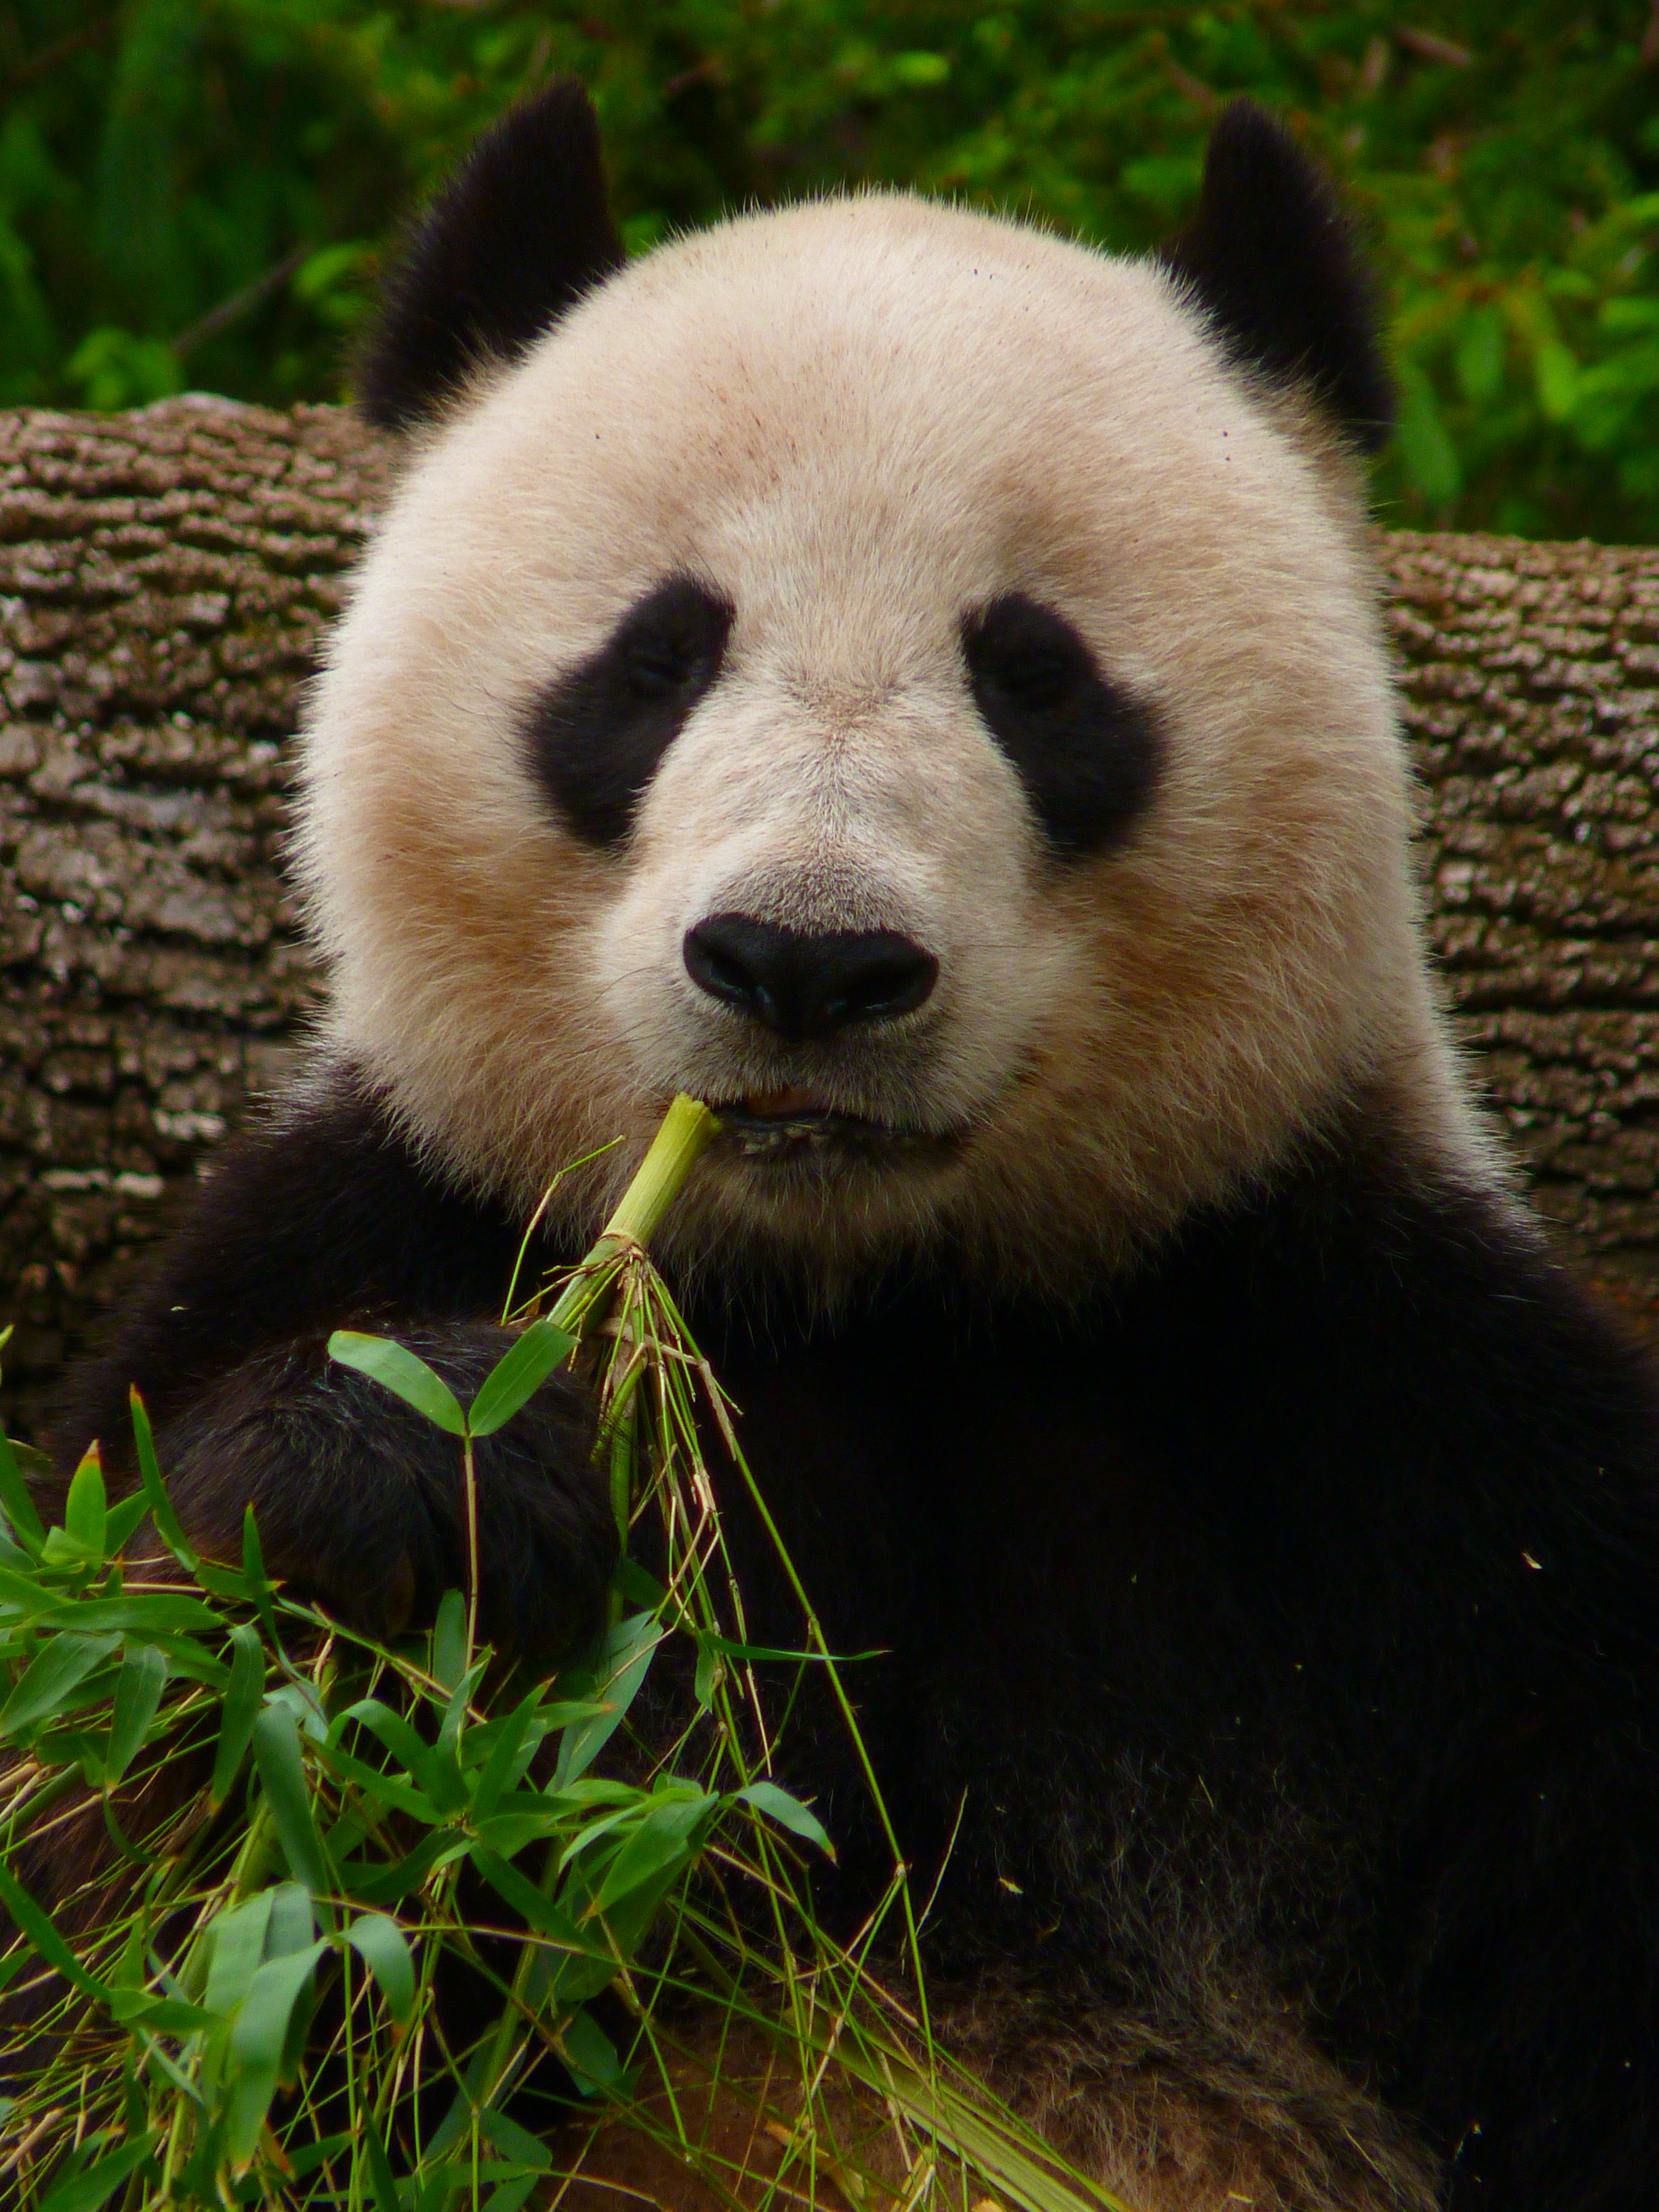 File:Giant Panda eating Bamboo.JPG - Wikimedia Commons